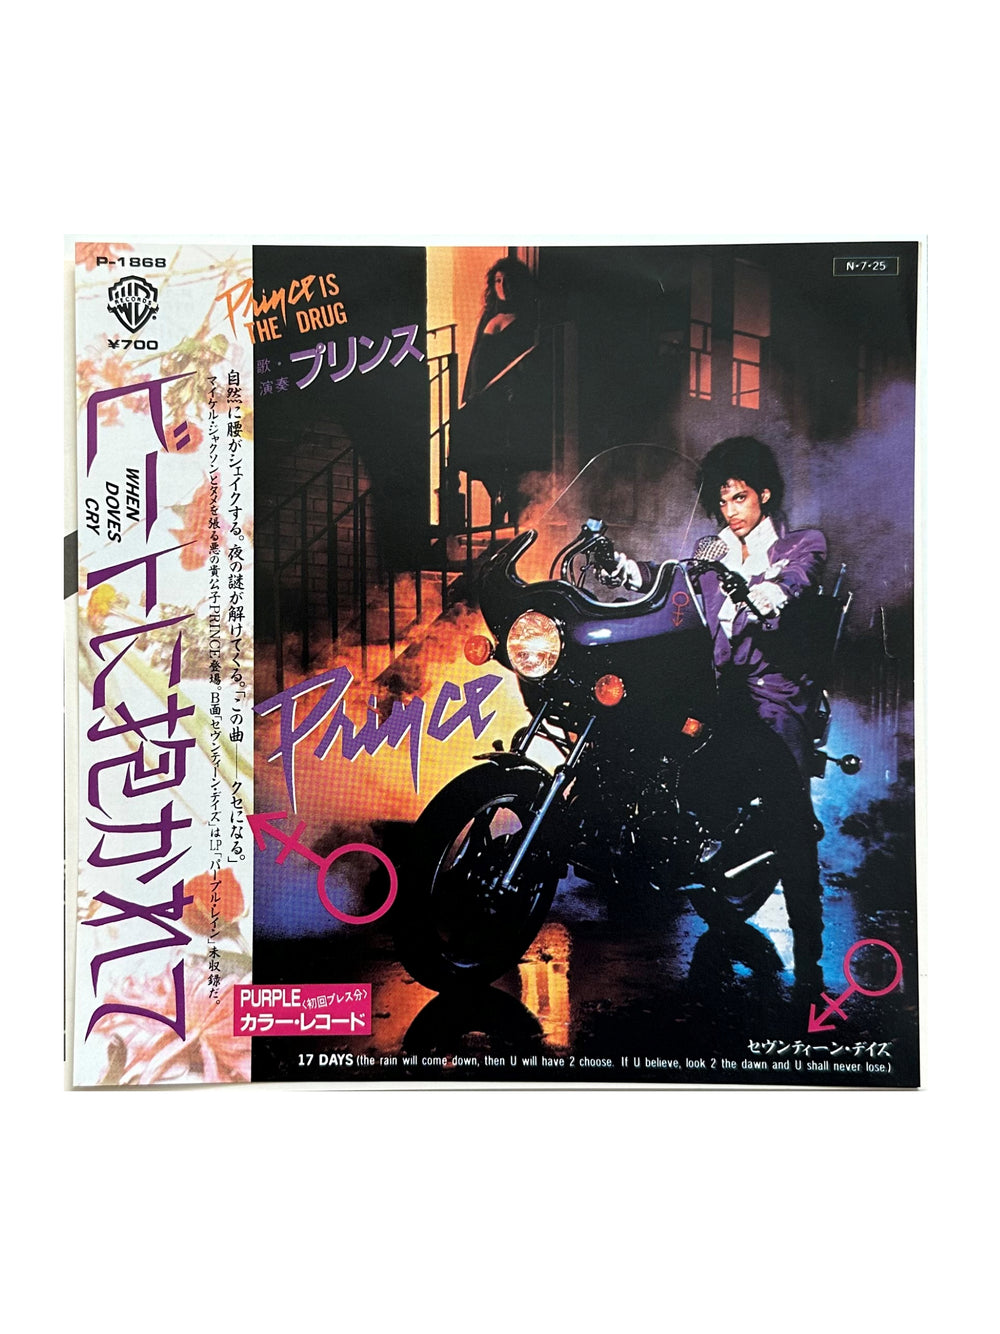 Prince – When Doves Cry Vinyl 7" Single Purple Vinyl Japan Preloved: 1984